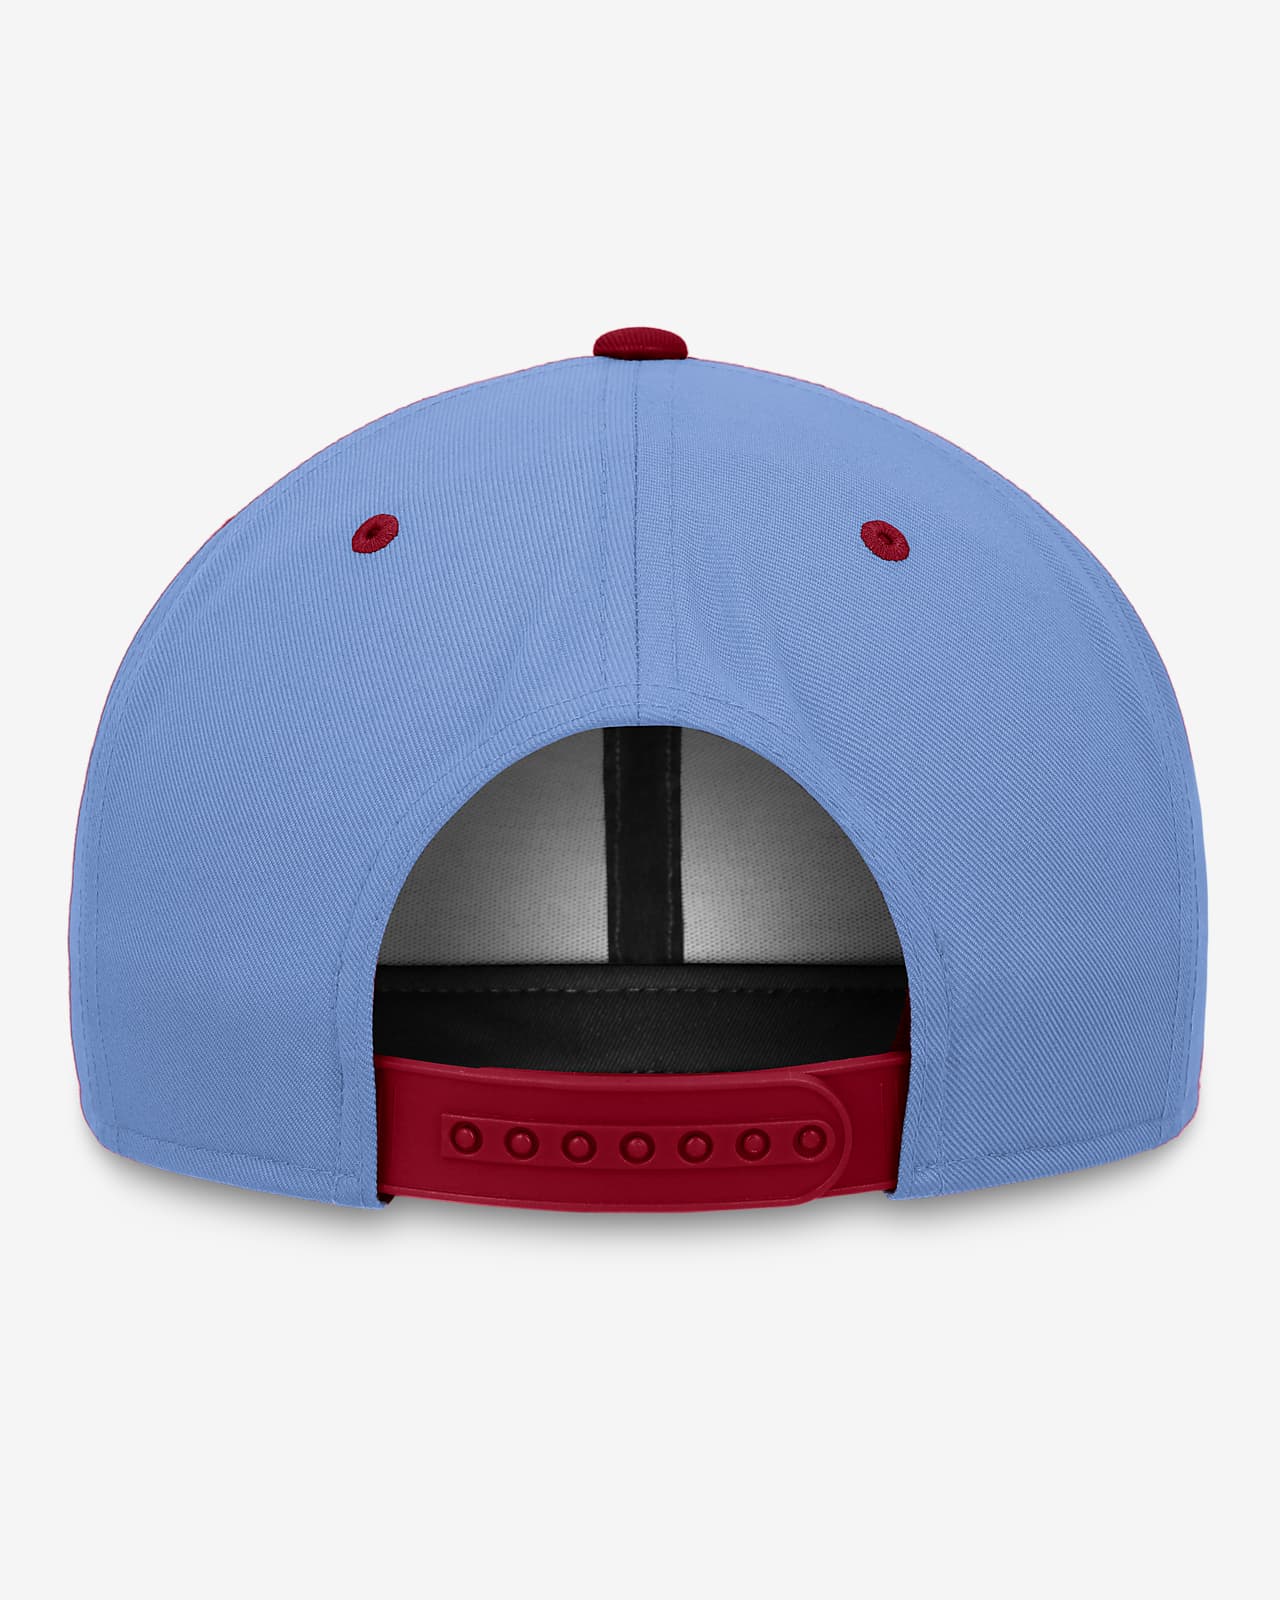 St. Louis Cardinals Pro Cooperstown Men's Nike MLB Adjustable Hat.